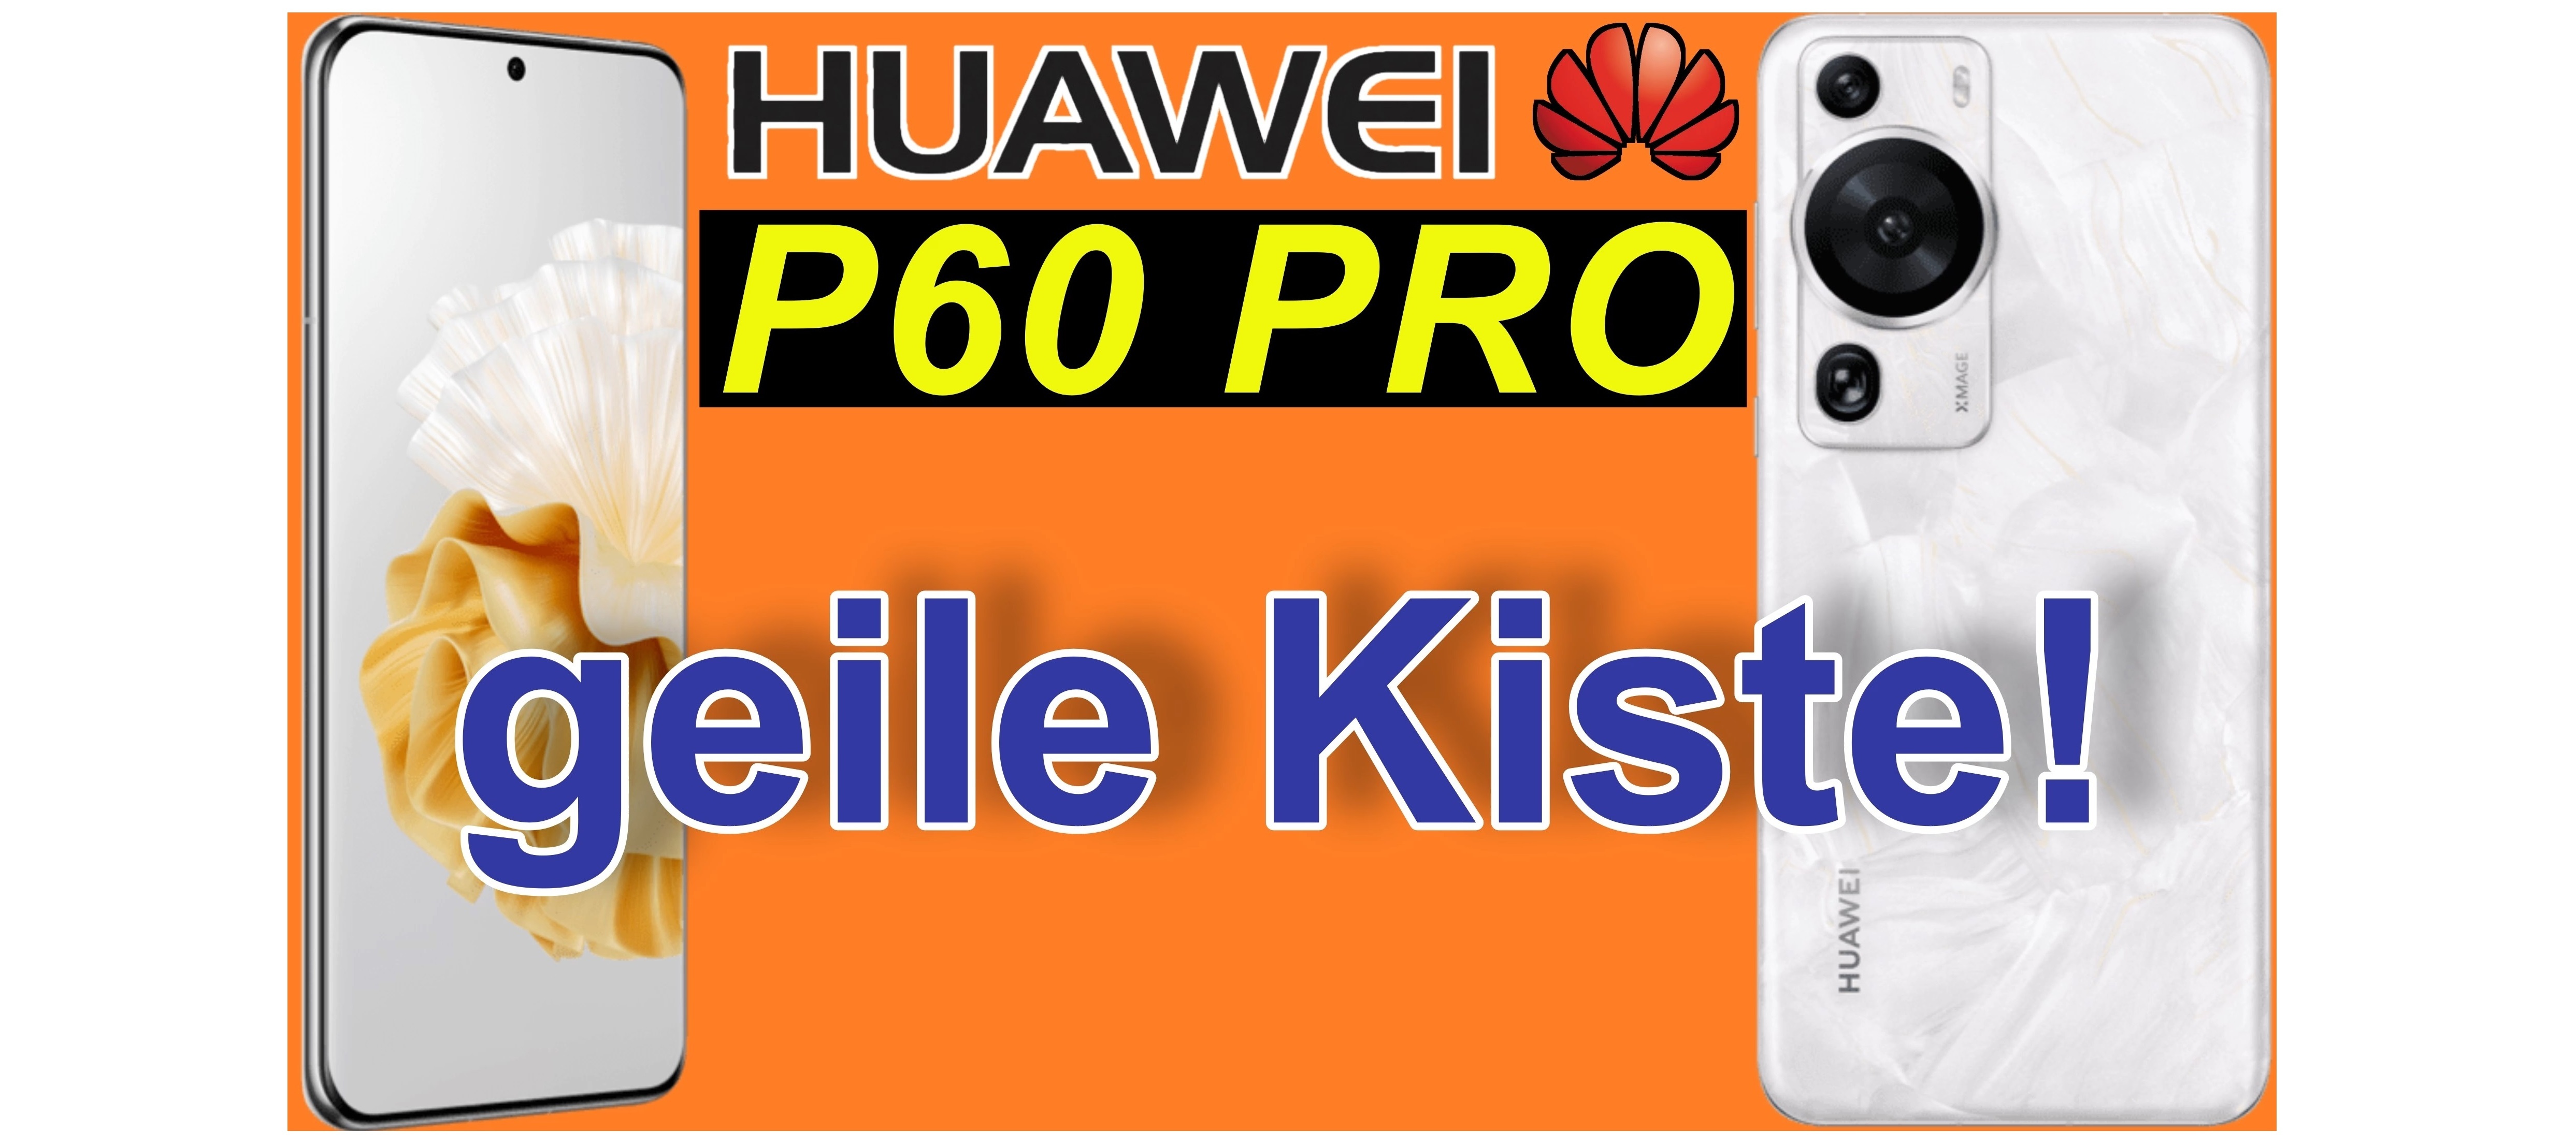 Huawei P60 Pro - knallhart genial im Test